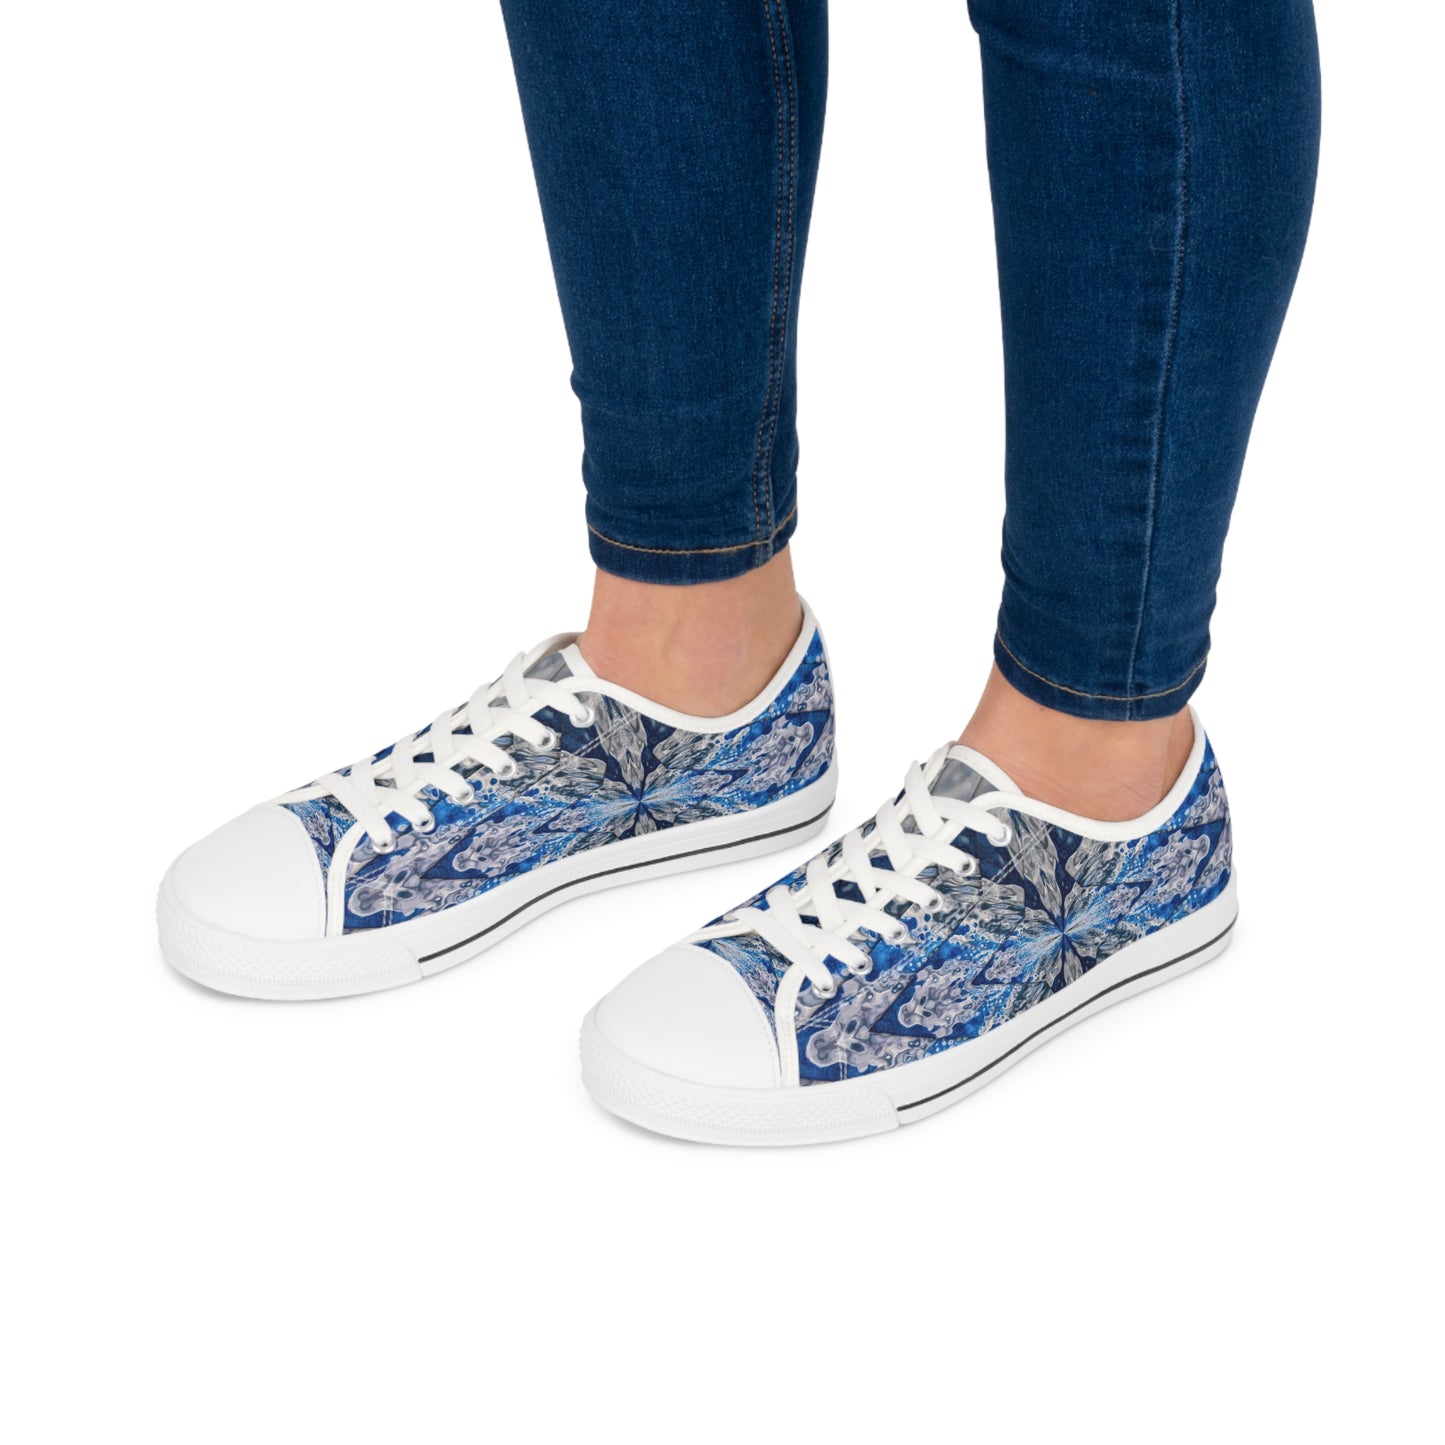 "Aqua Math" JoySneaks Women's Low Top Sneakers